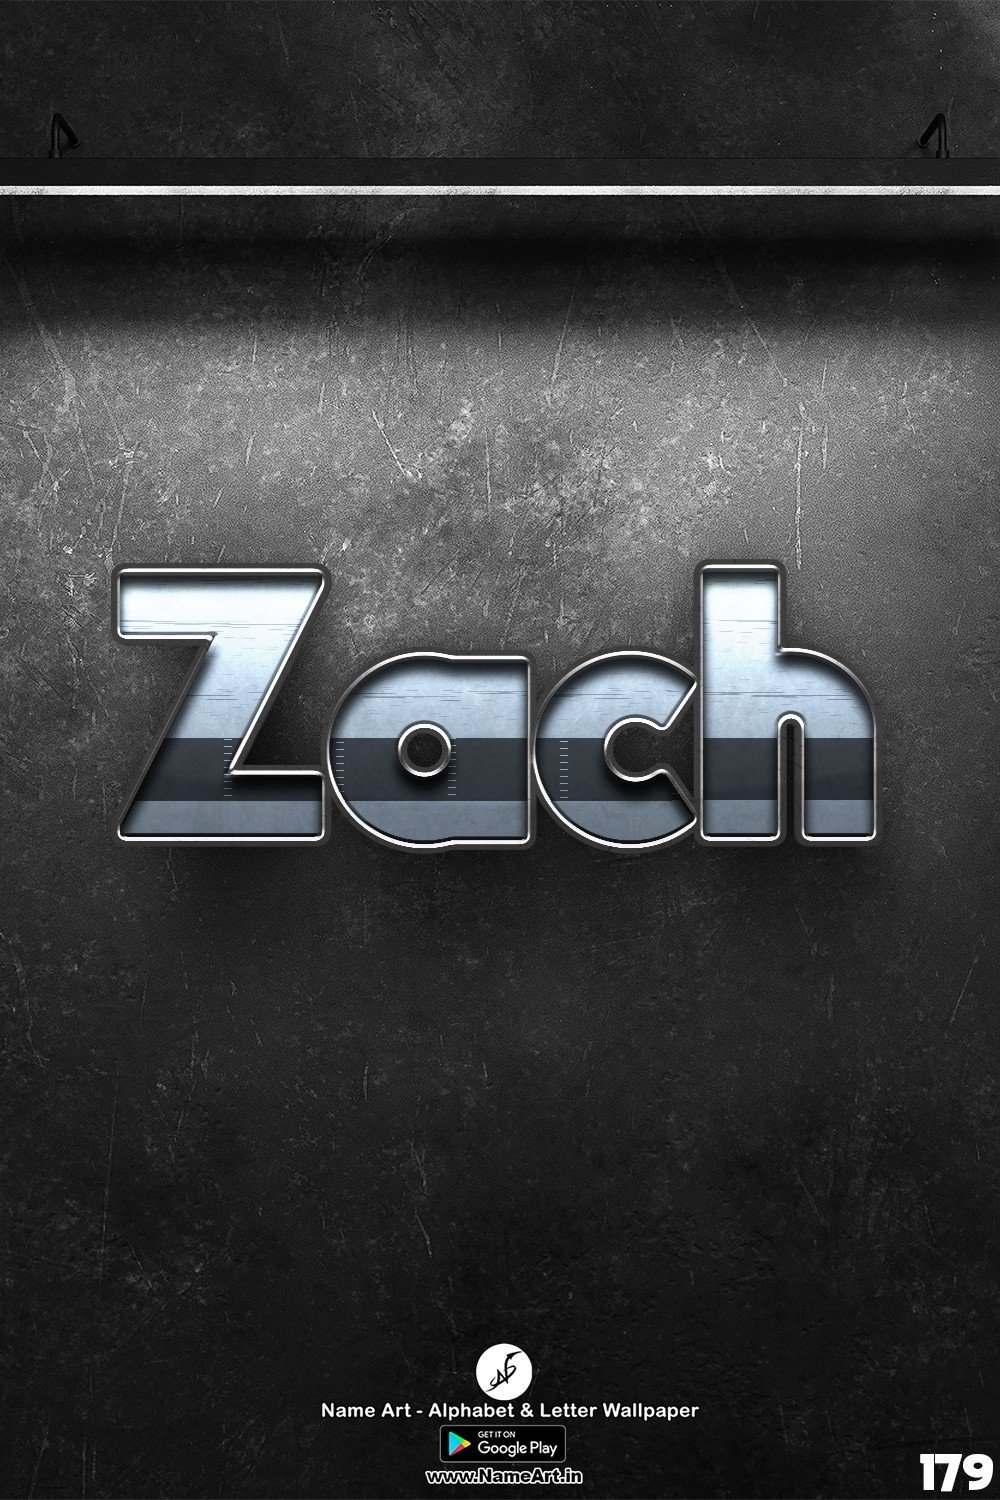 Zach | Whatsapp Status Zach | Happy Birthday Zach !! | New Whatsapp Status Zach Images |